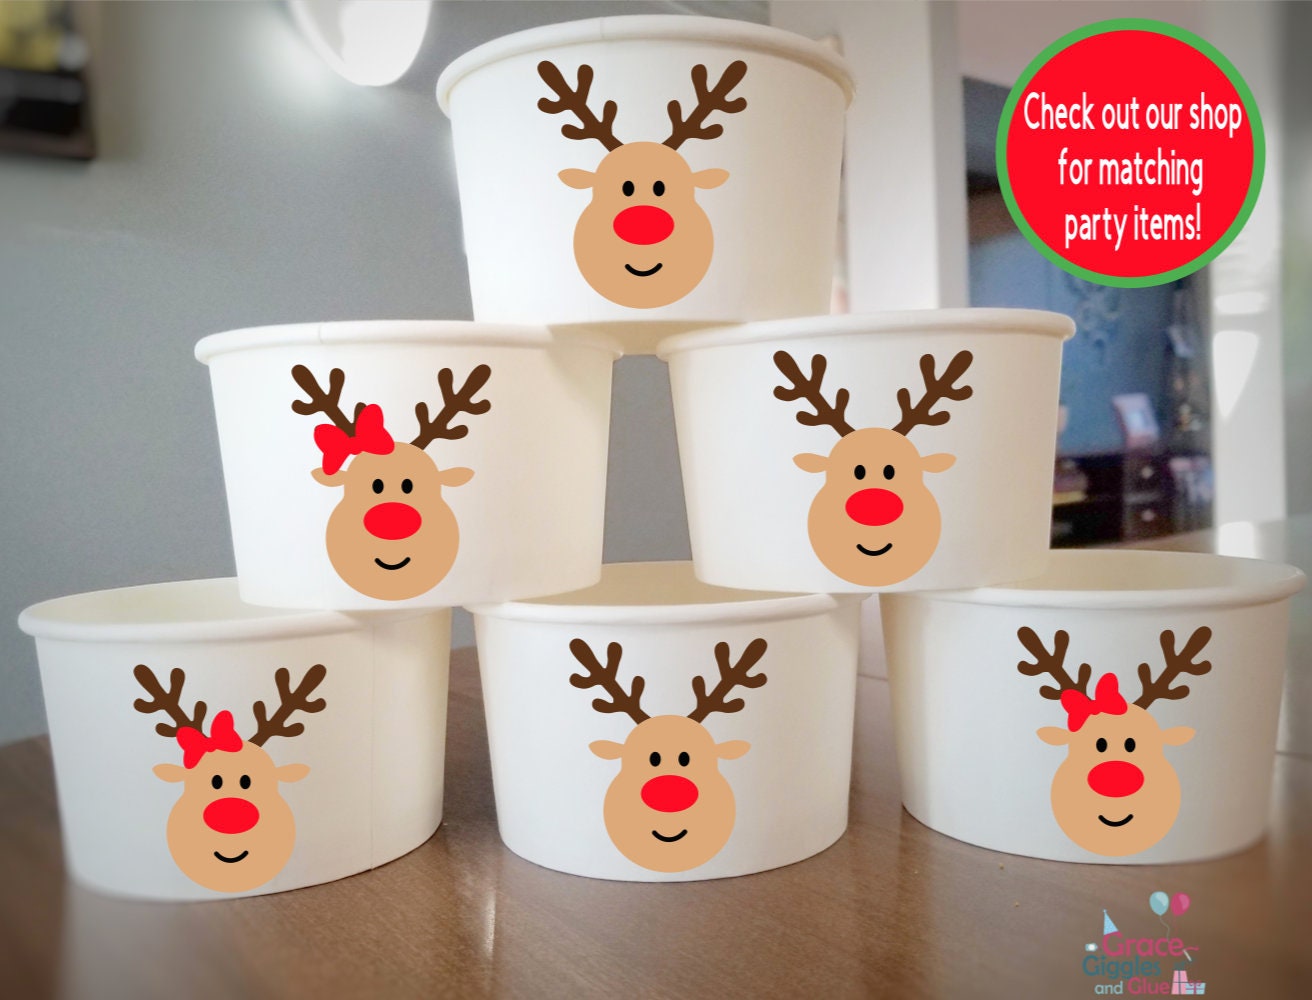 Homlouue 48 PCS Christmas Cups Disposable Coffee Tea Cups Reindeer Christmas